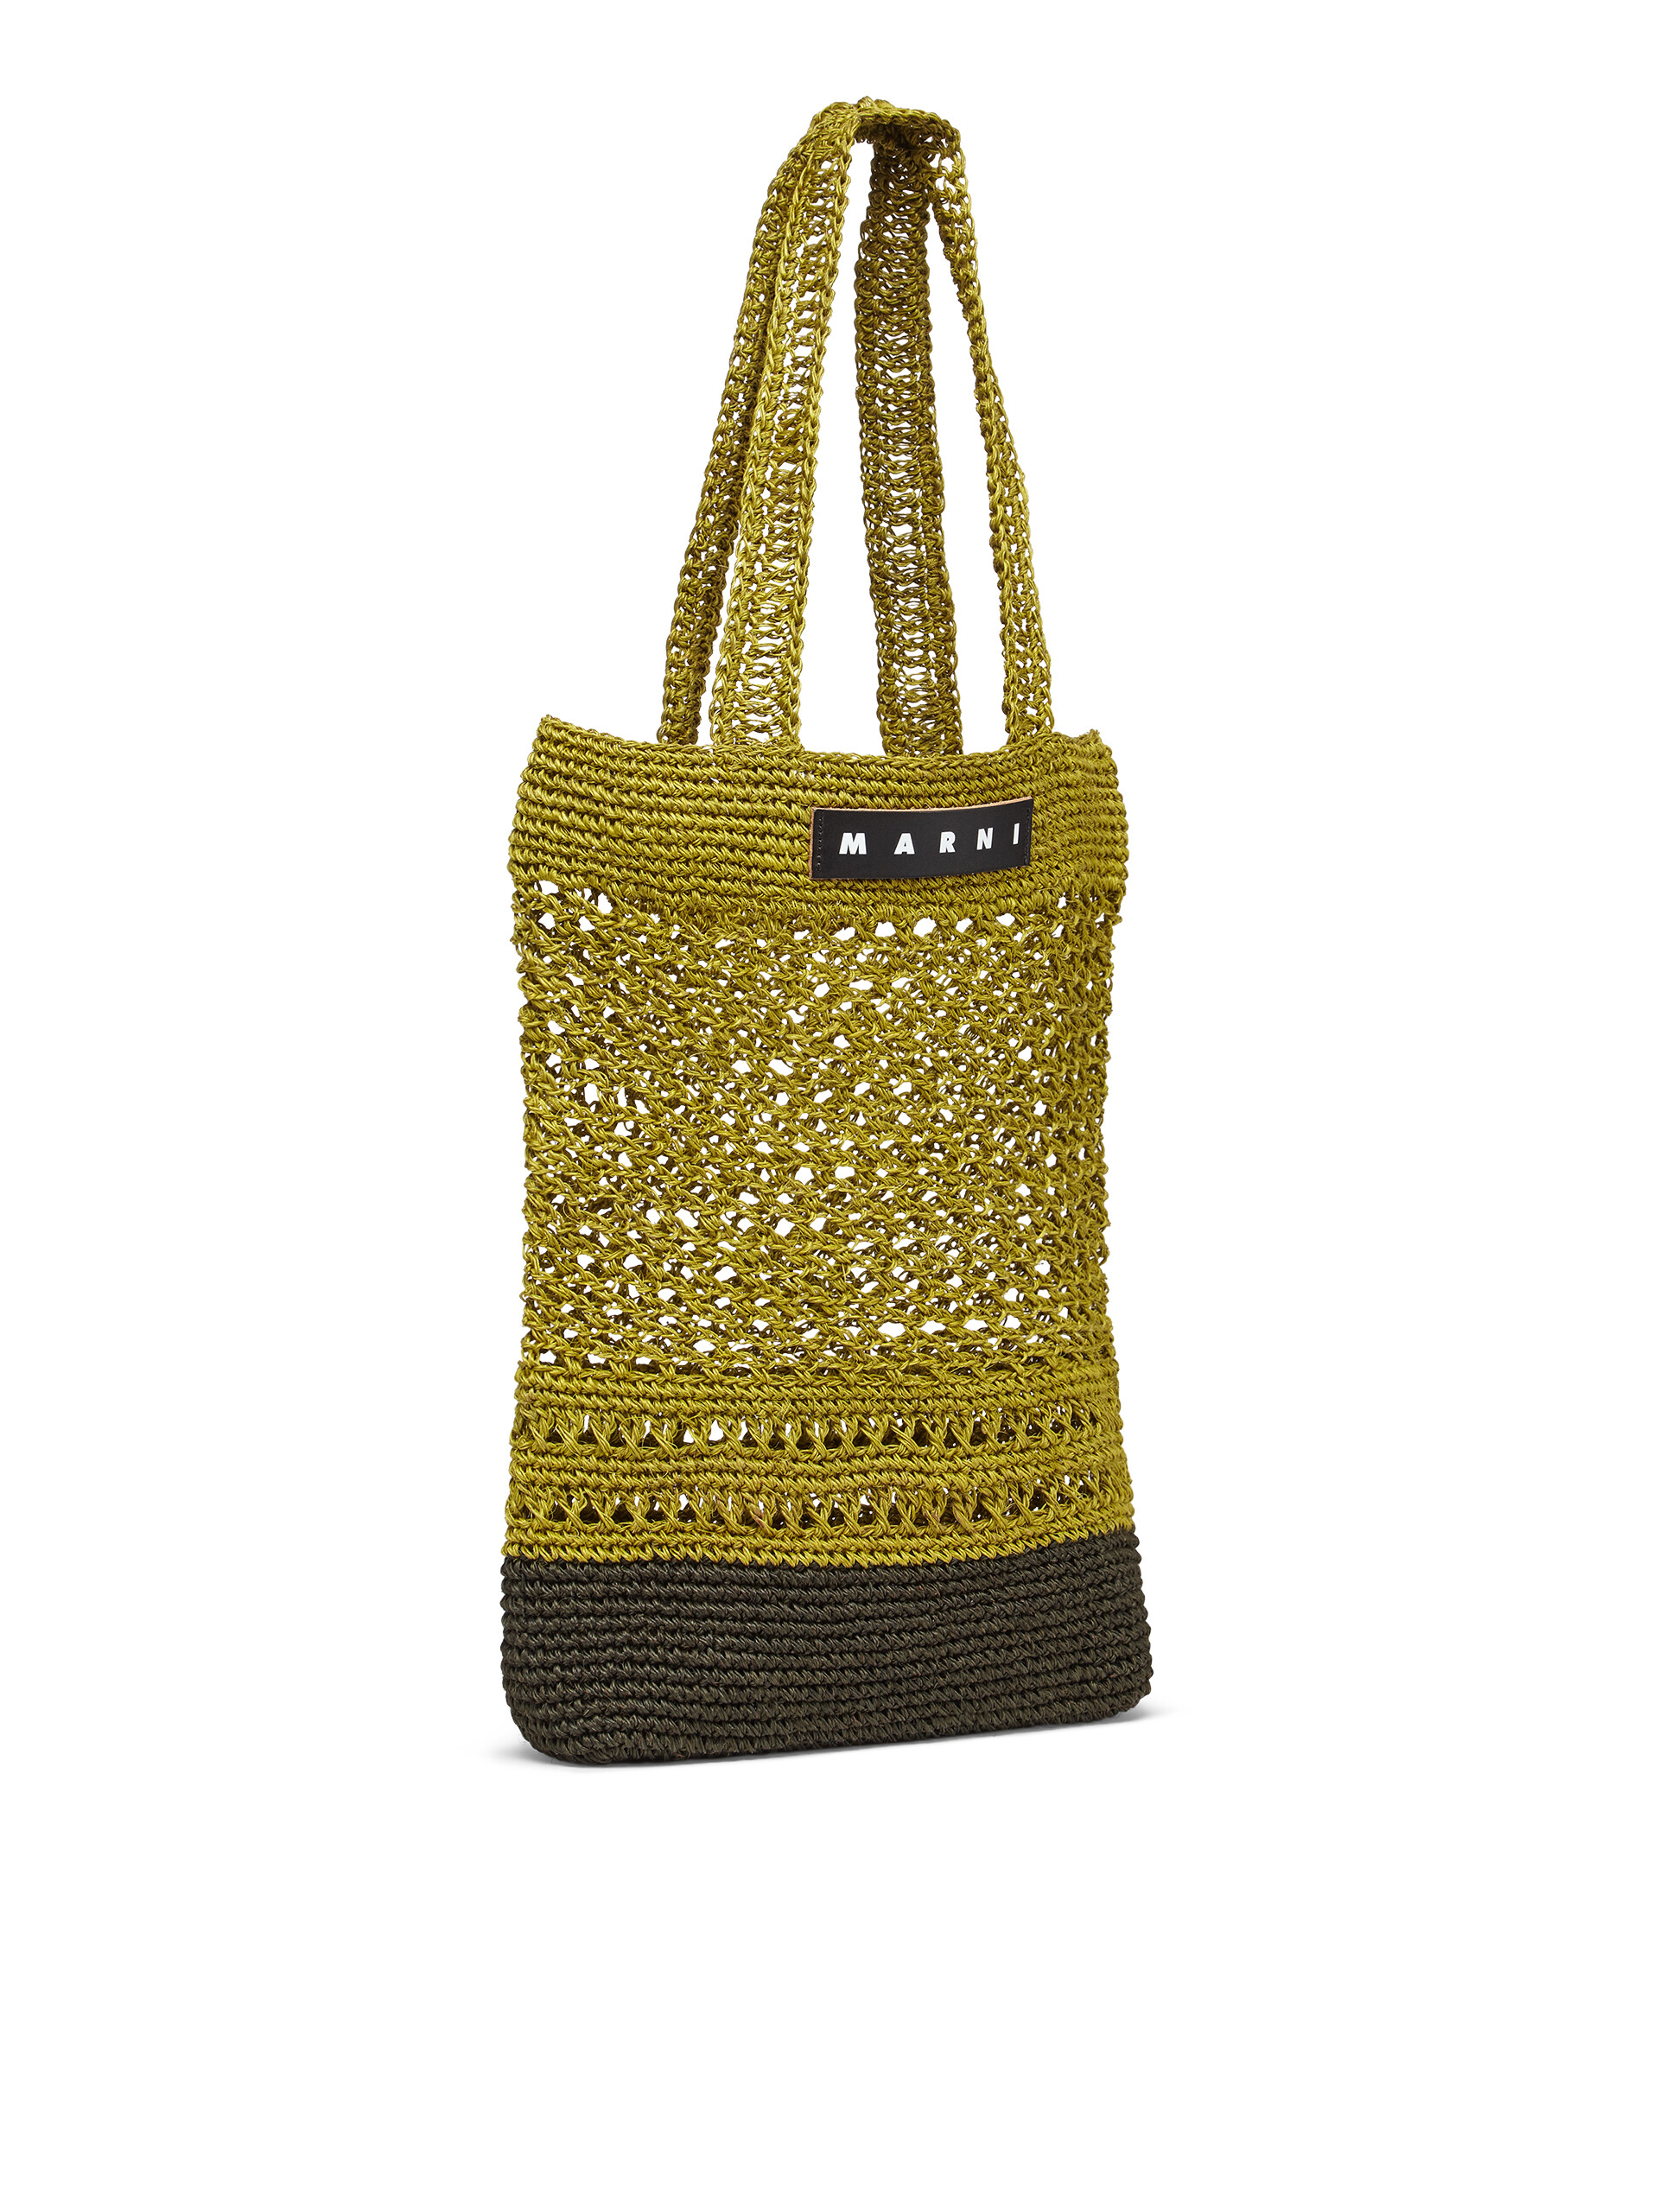 MARNI MARKET bag in green and brown natural fiber - Bags - Image 2